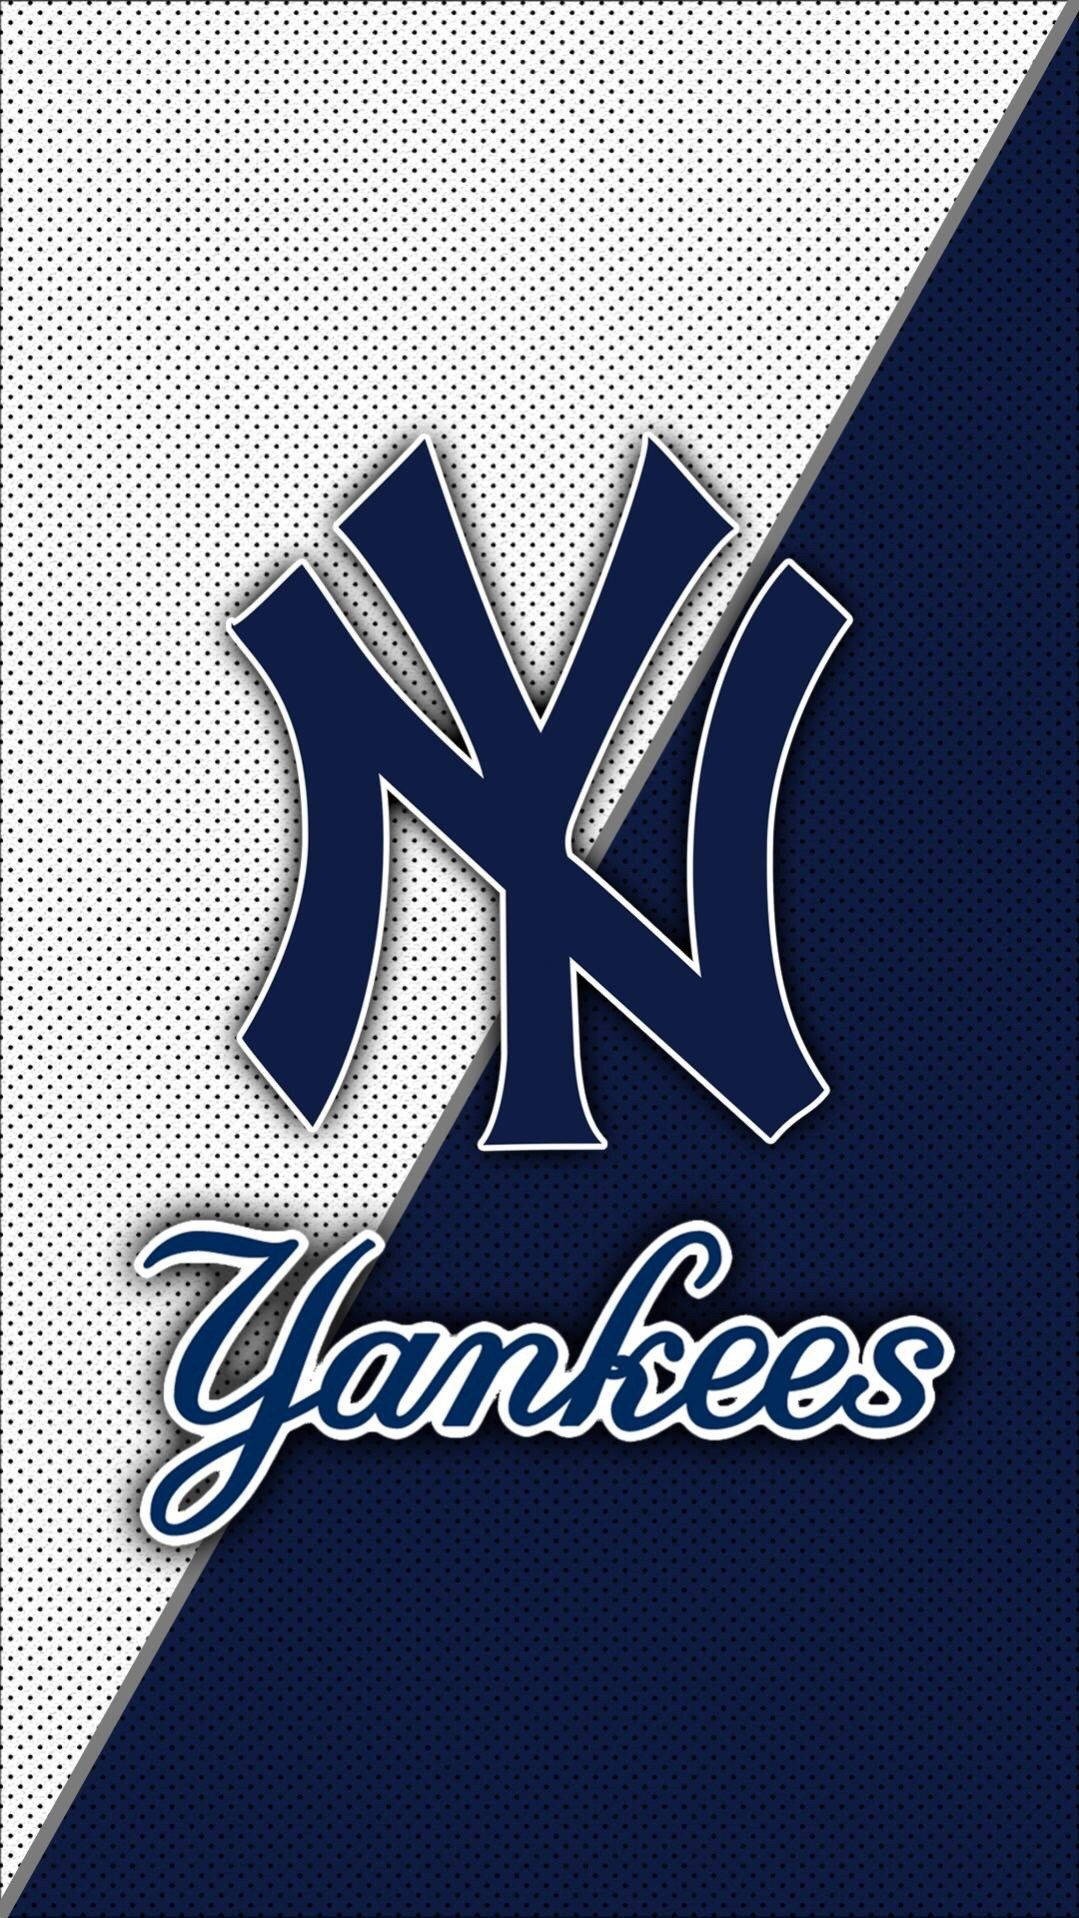 Cool New York Yankees Wallpapers